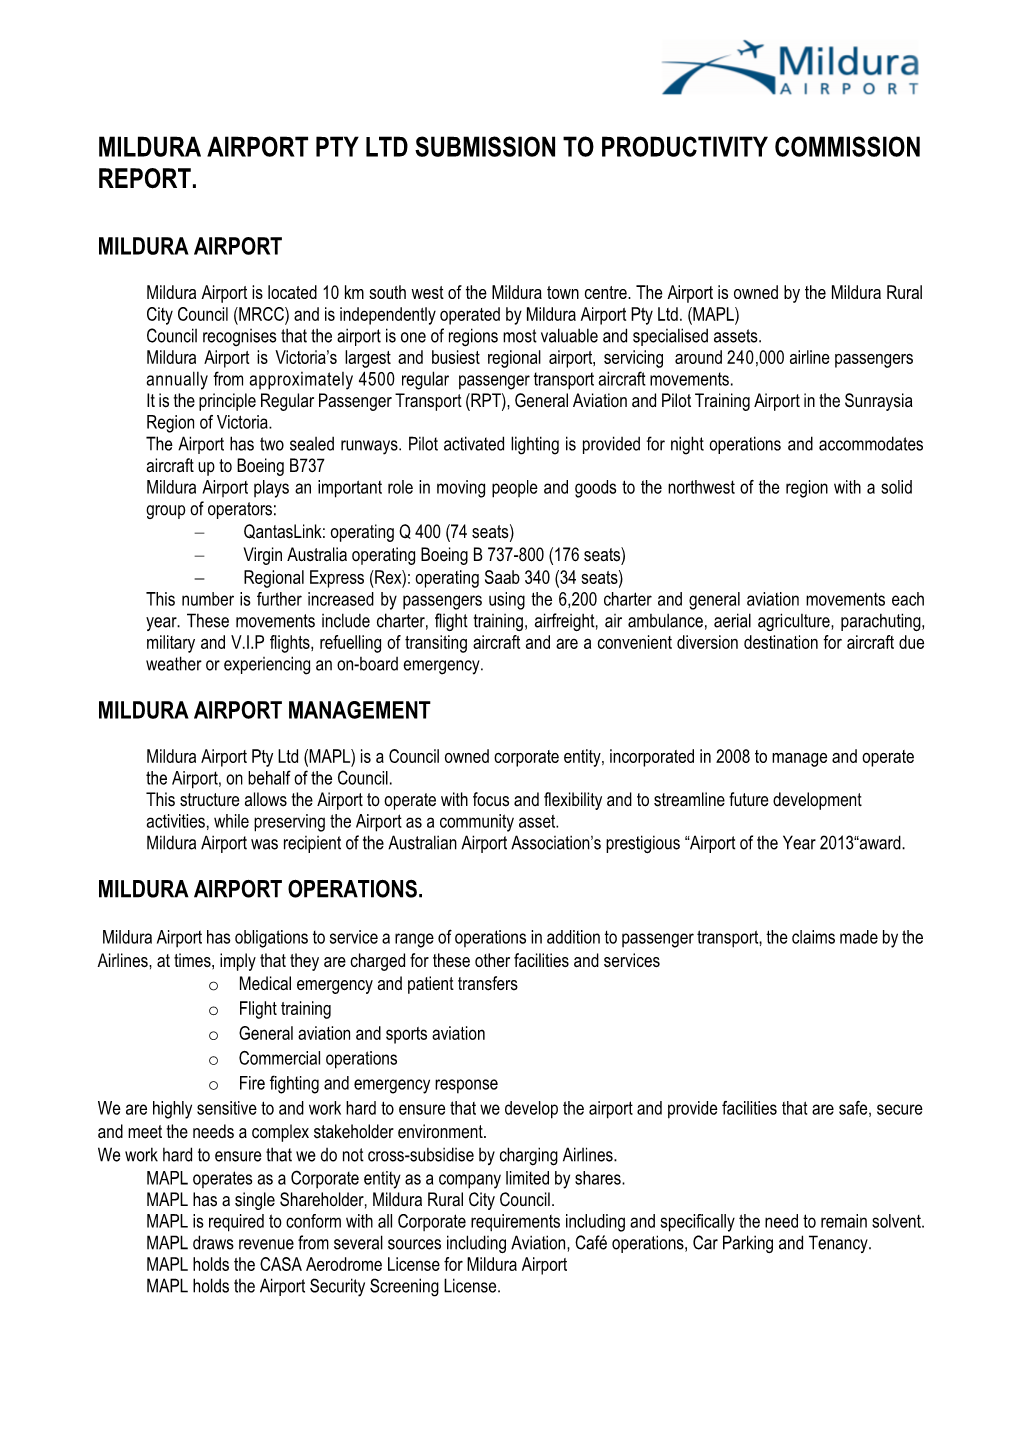 Mildura Airport Pty Ltd Submission to Productivity Commission Report